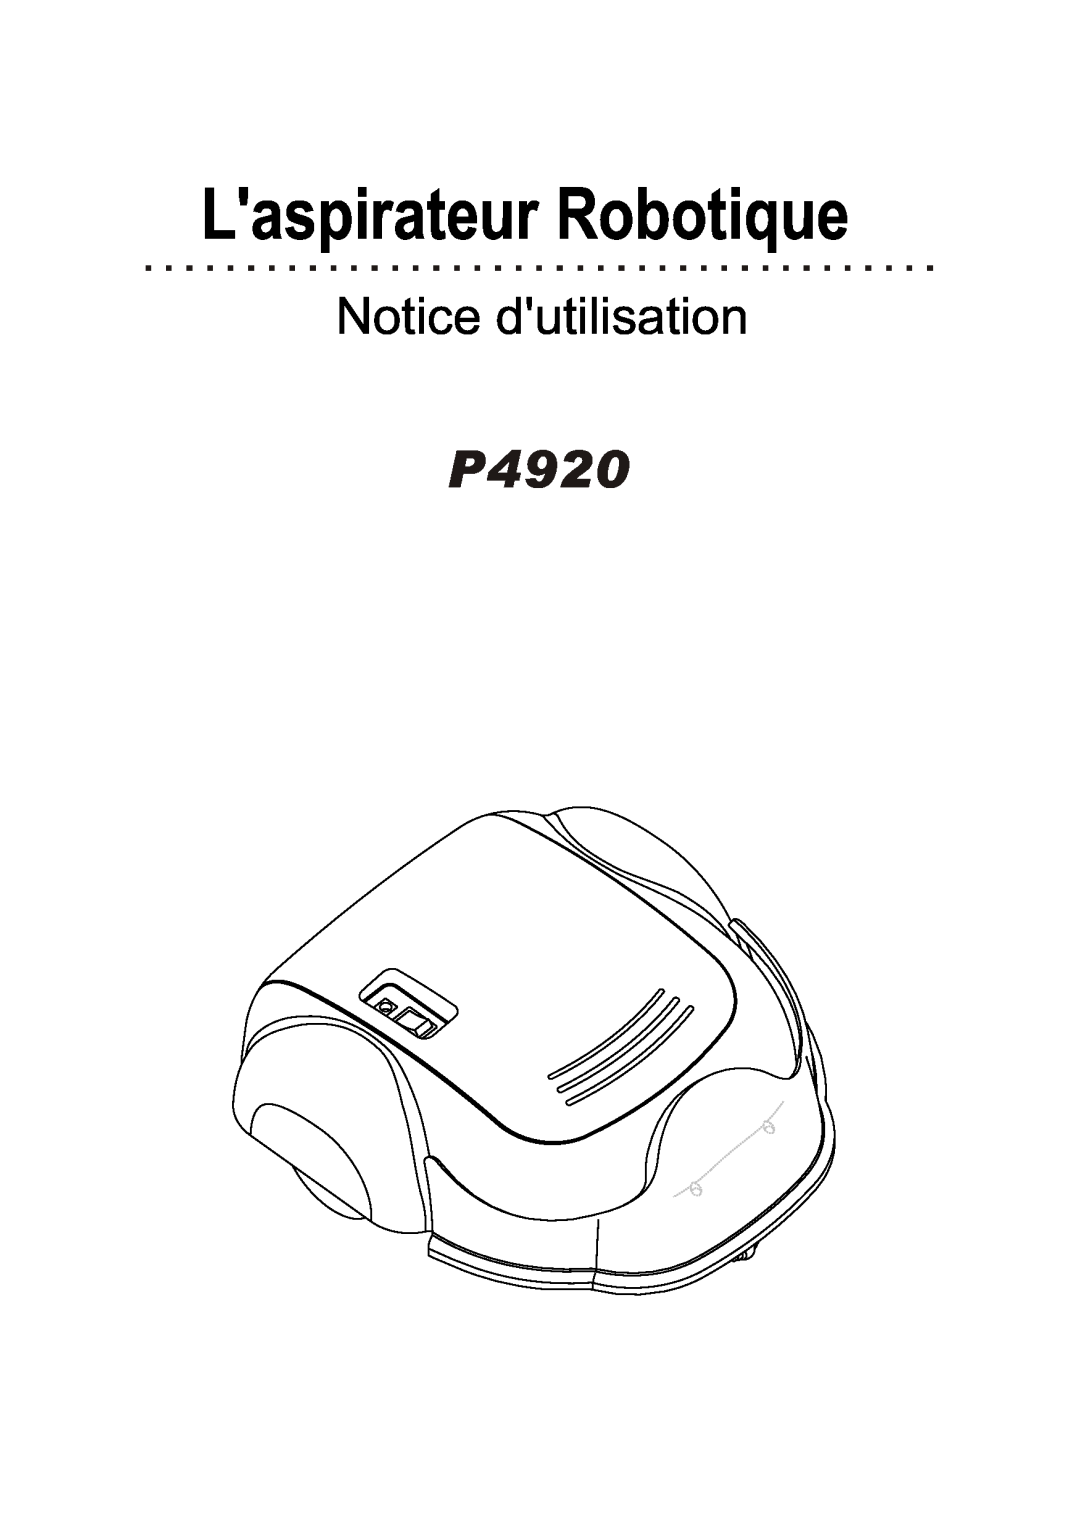 P3 International P4920 operation manual Laspirateur Robotique, Notice dutilisation 